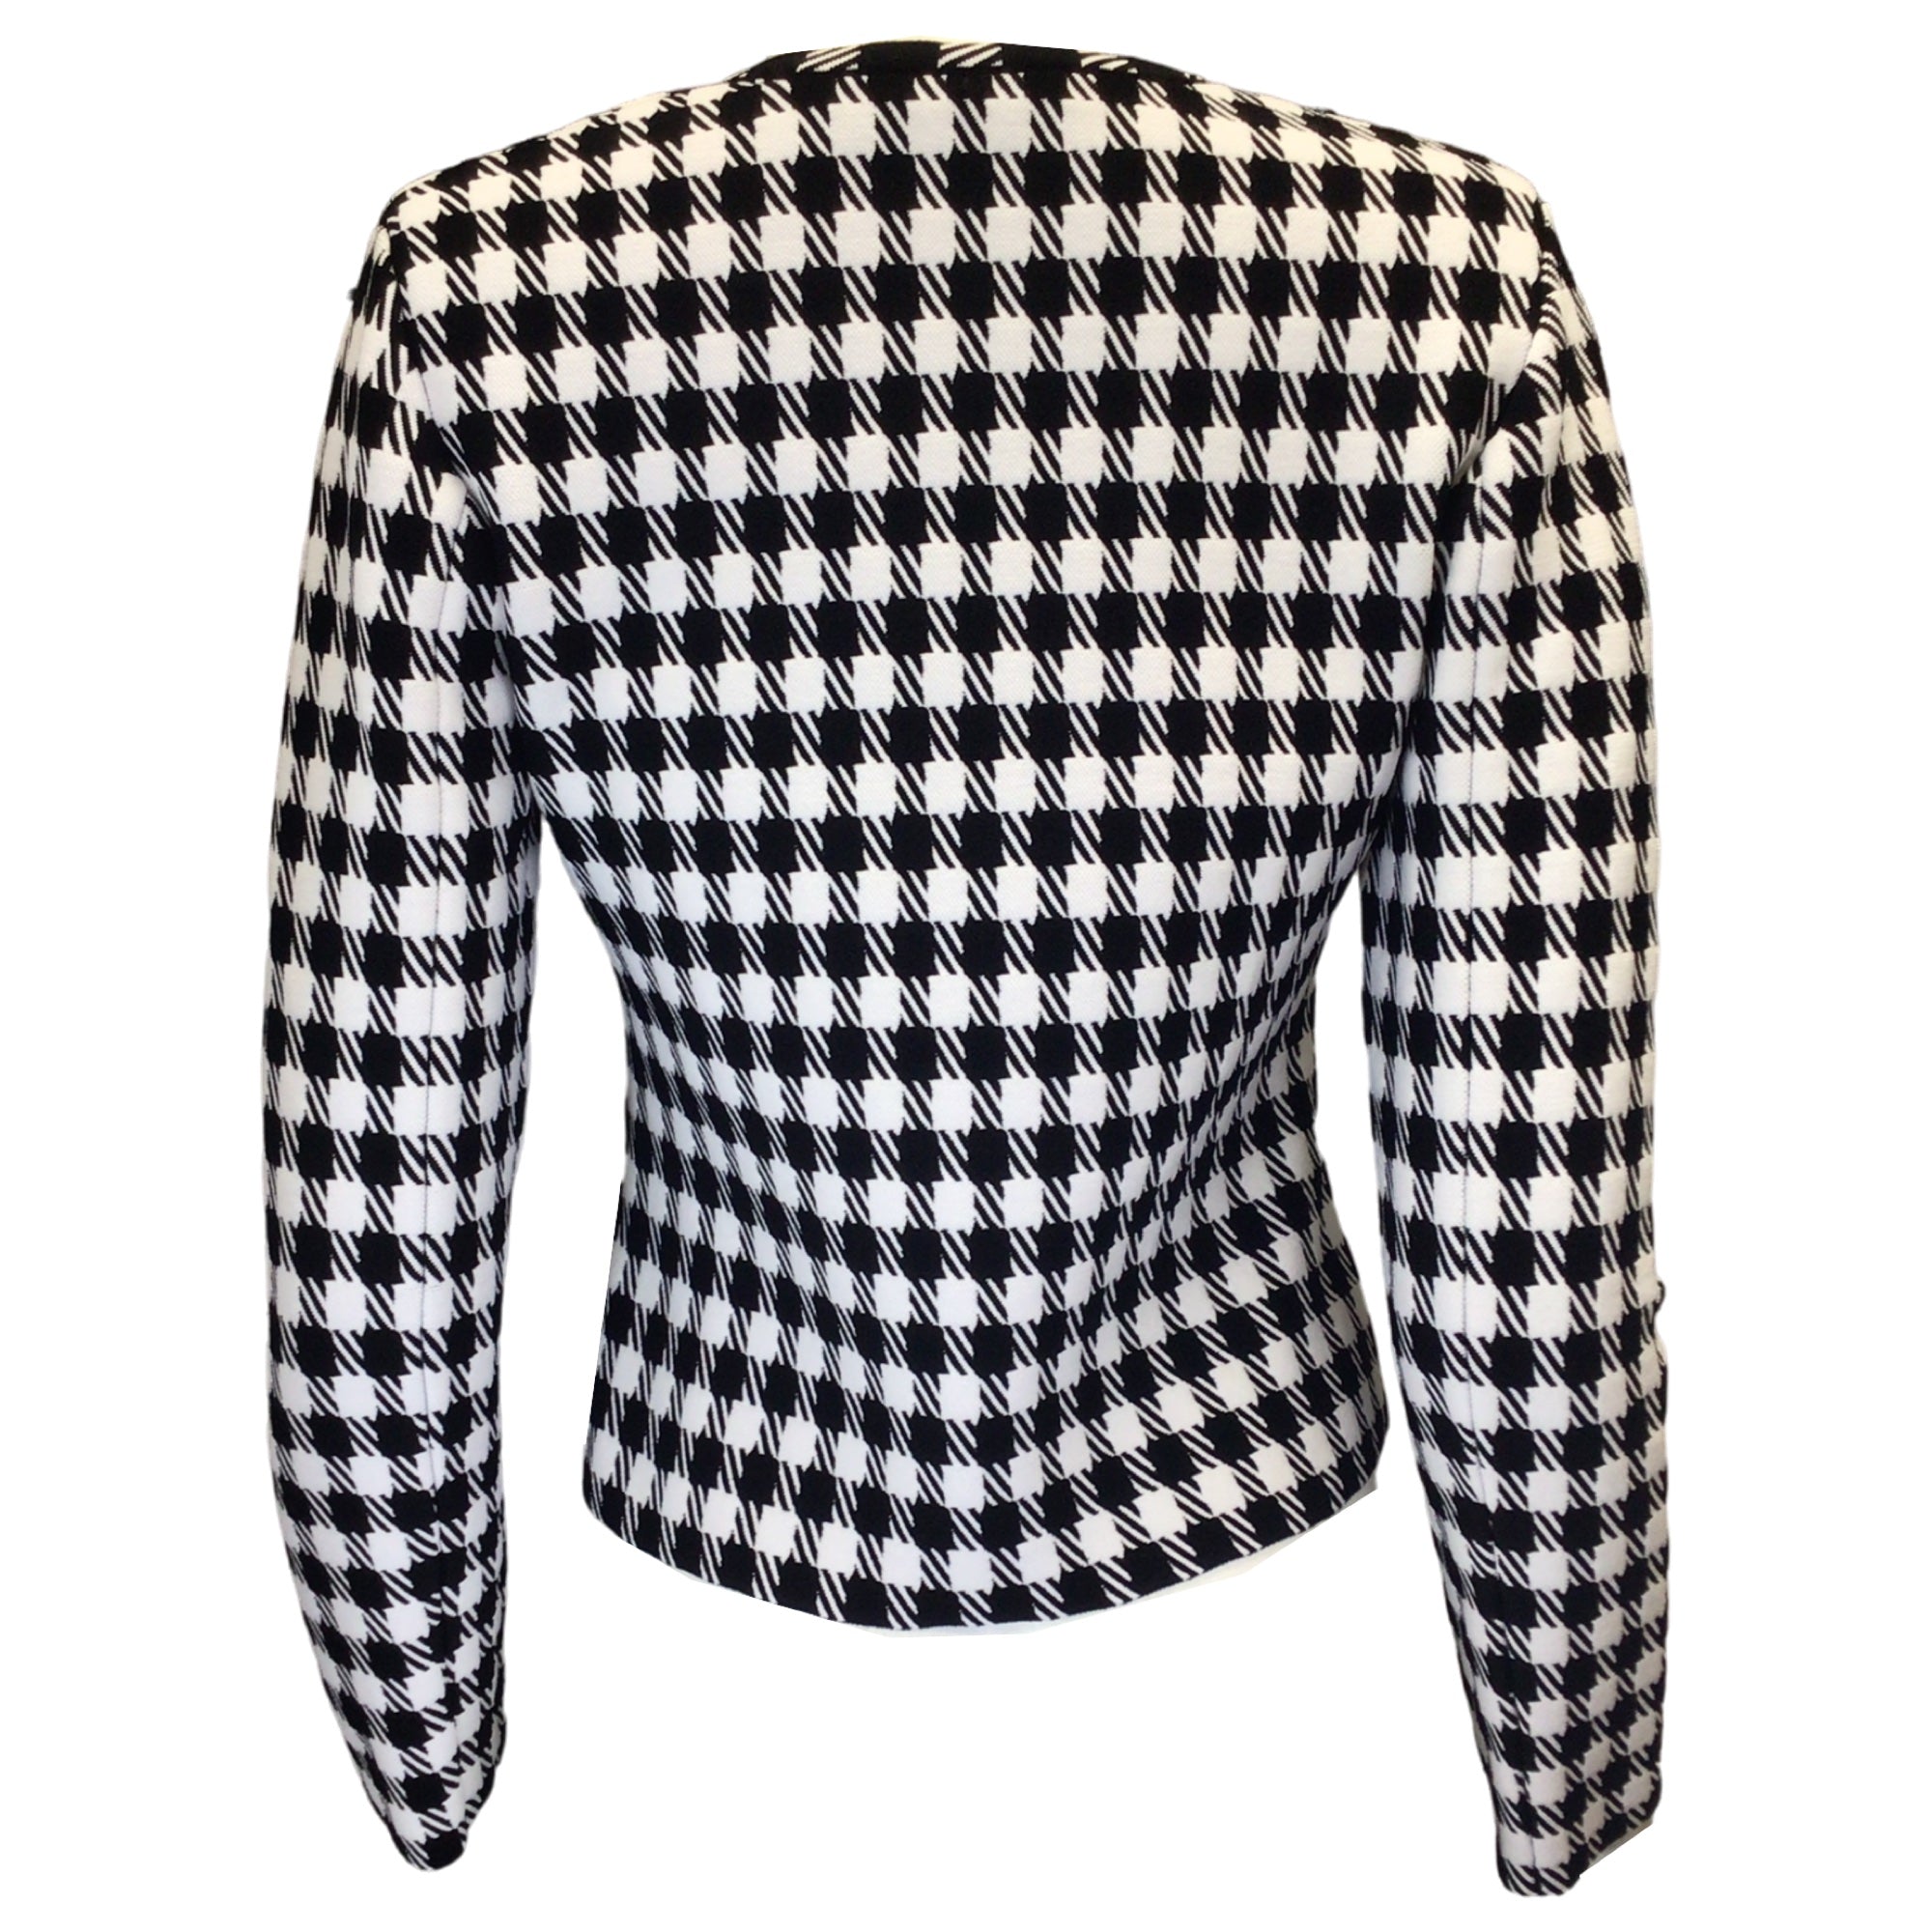 Alaia Black / White Check Knit Cardigan Sweater